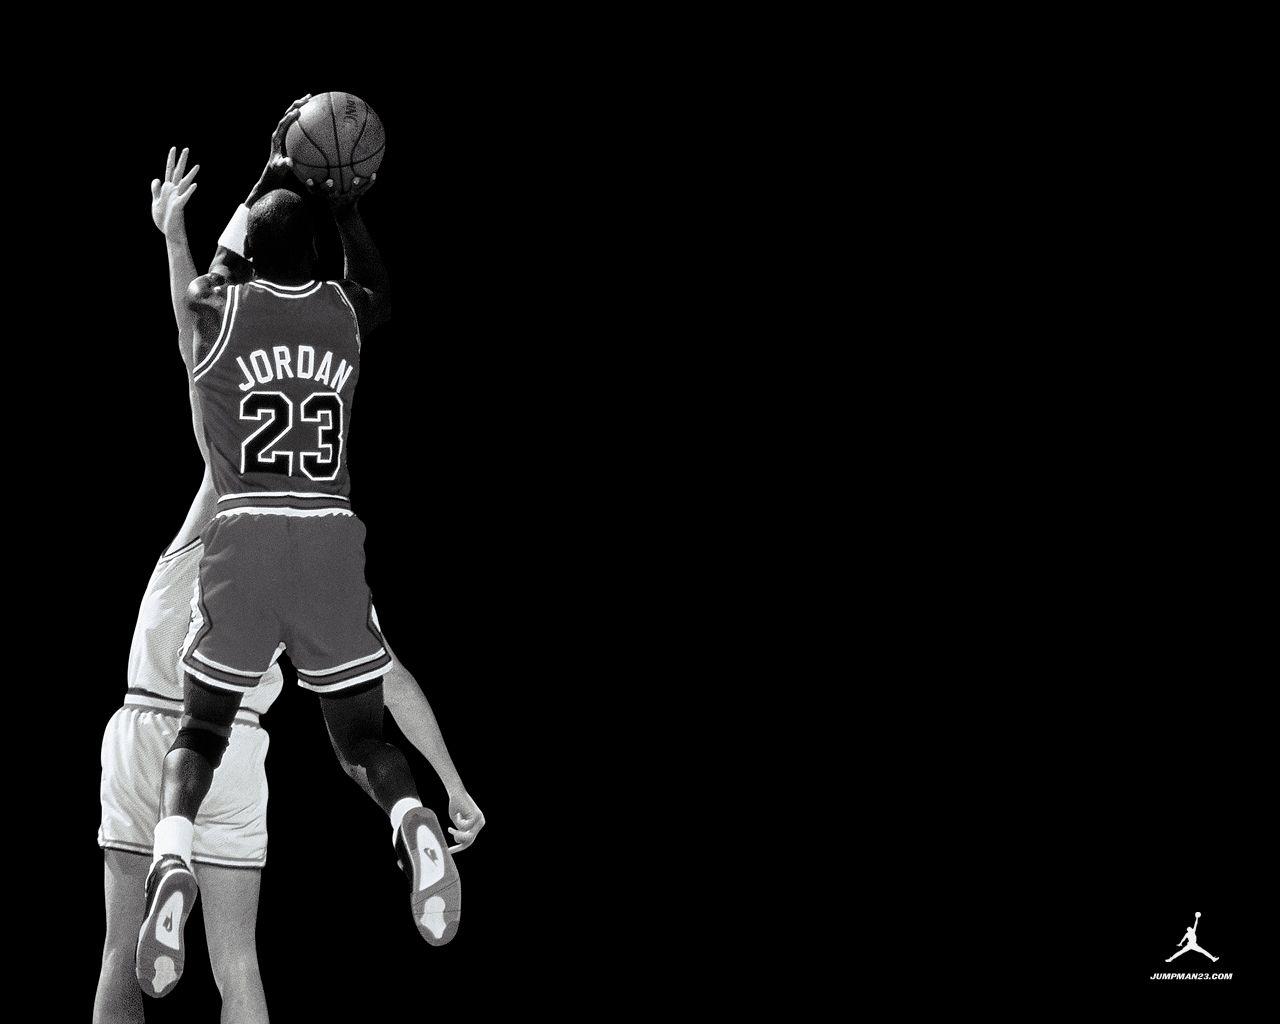 Astonishing Michael Jordan Wallpaper for iPhone 1280x1024PX